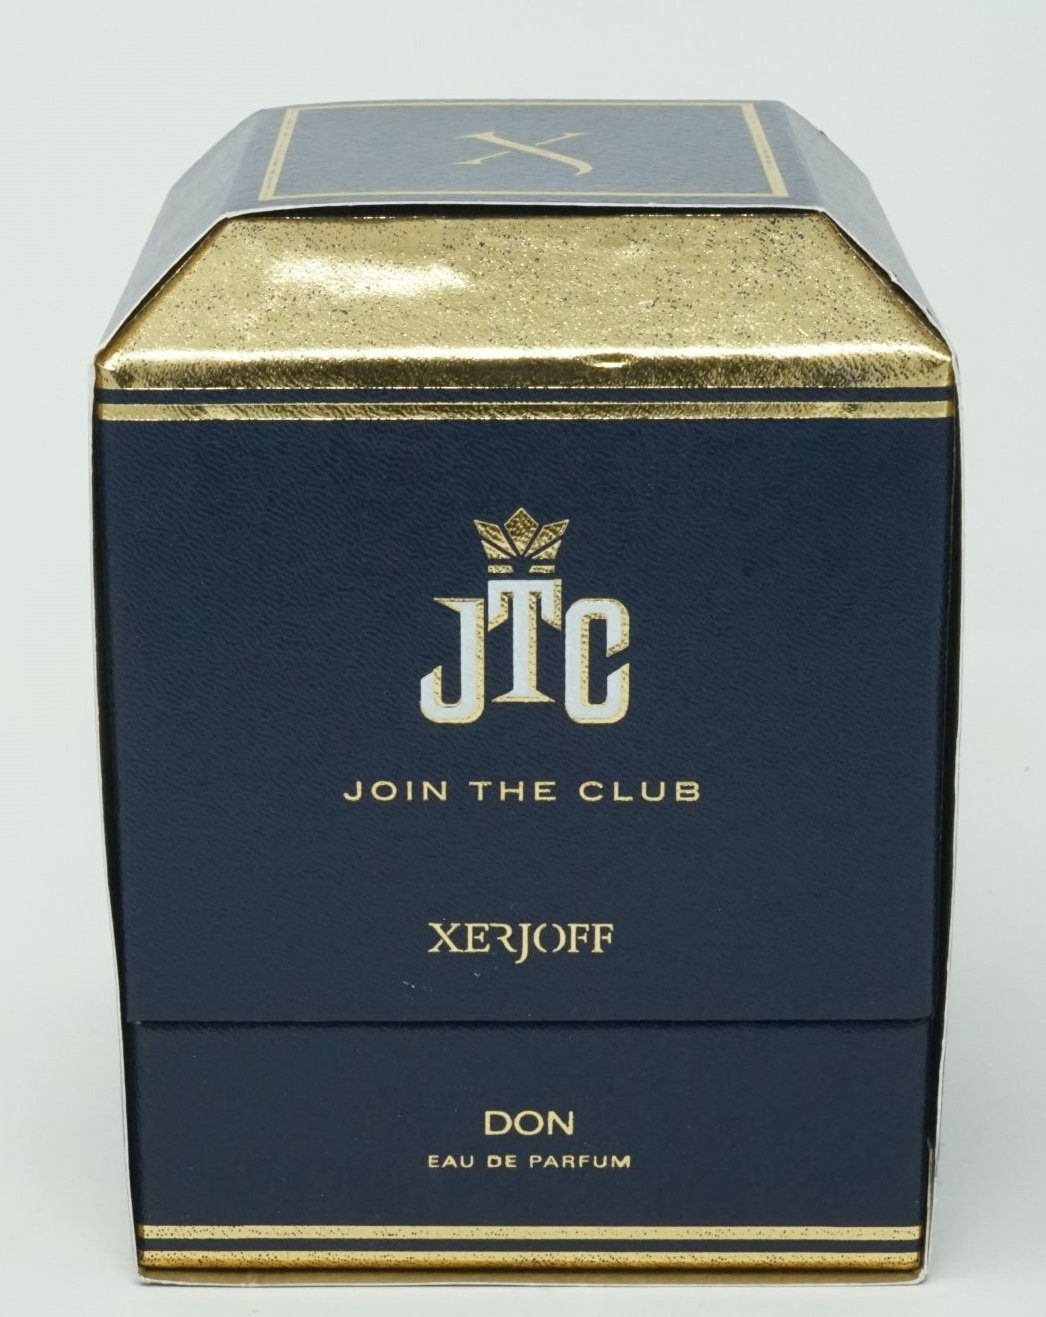 XERJOFF Eau de Parfum XerJoff Joun The Club Don Eau de Parfum 50 ml